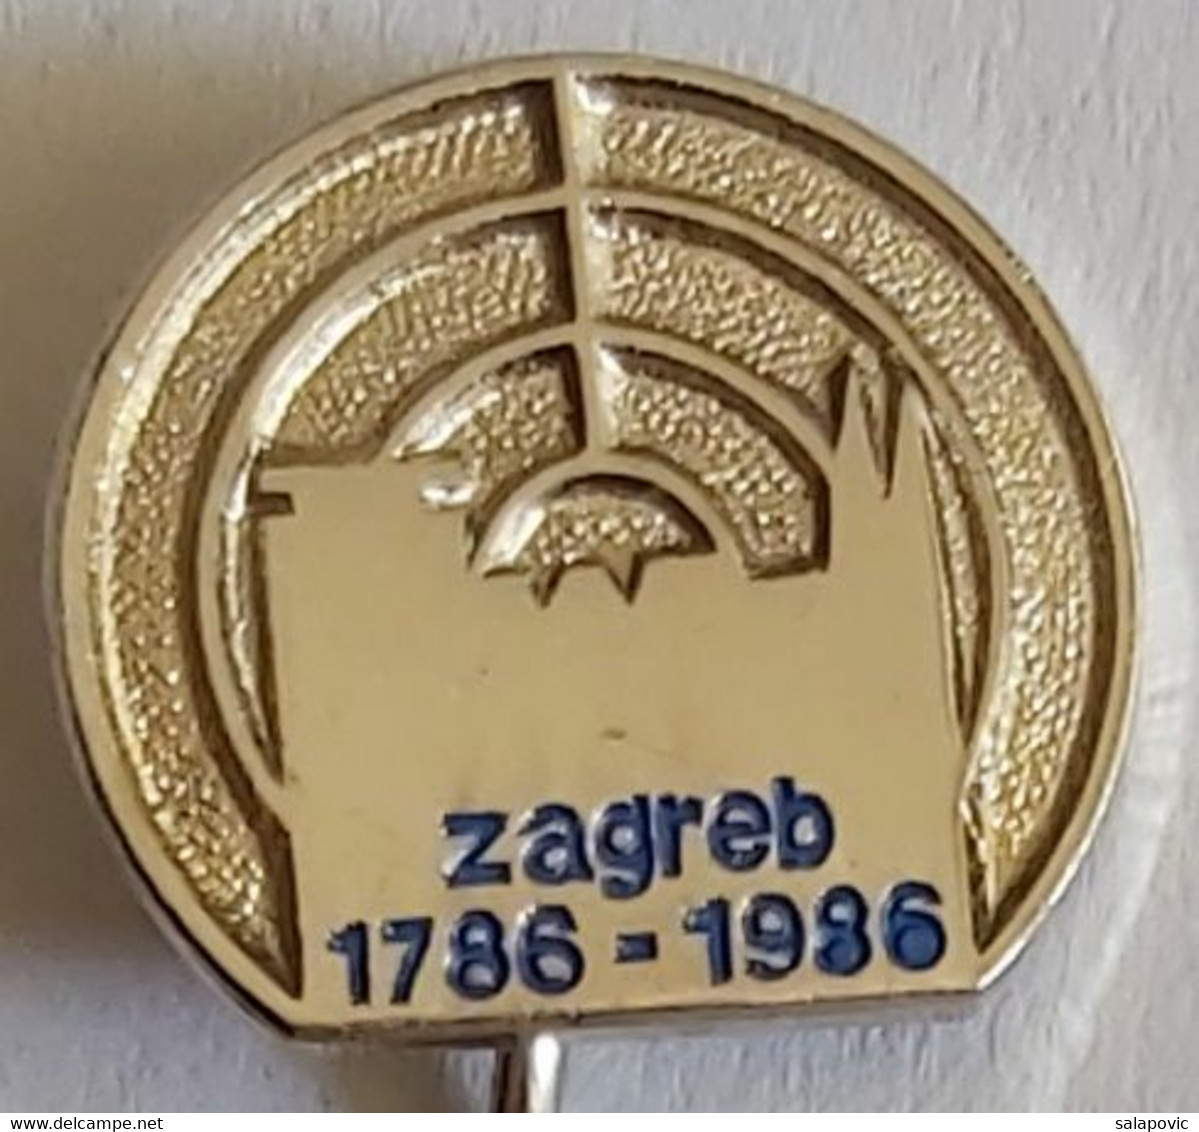 Zagreb 1786 - 1986 Croatia Archery Zagreb Shooting Association PIN A6/2 - Boogschieten